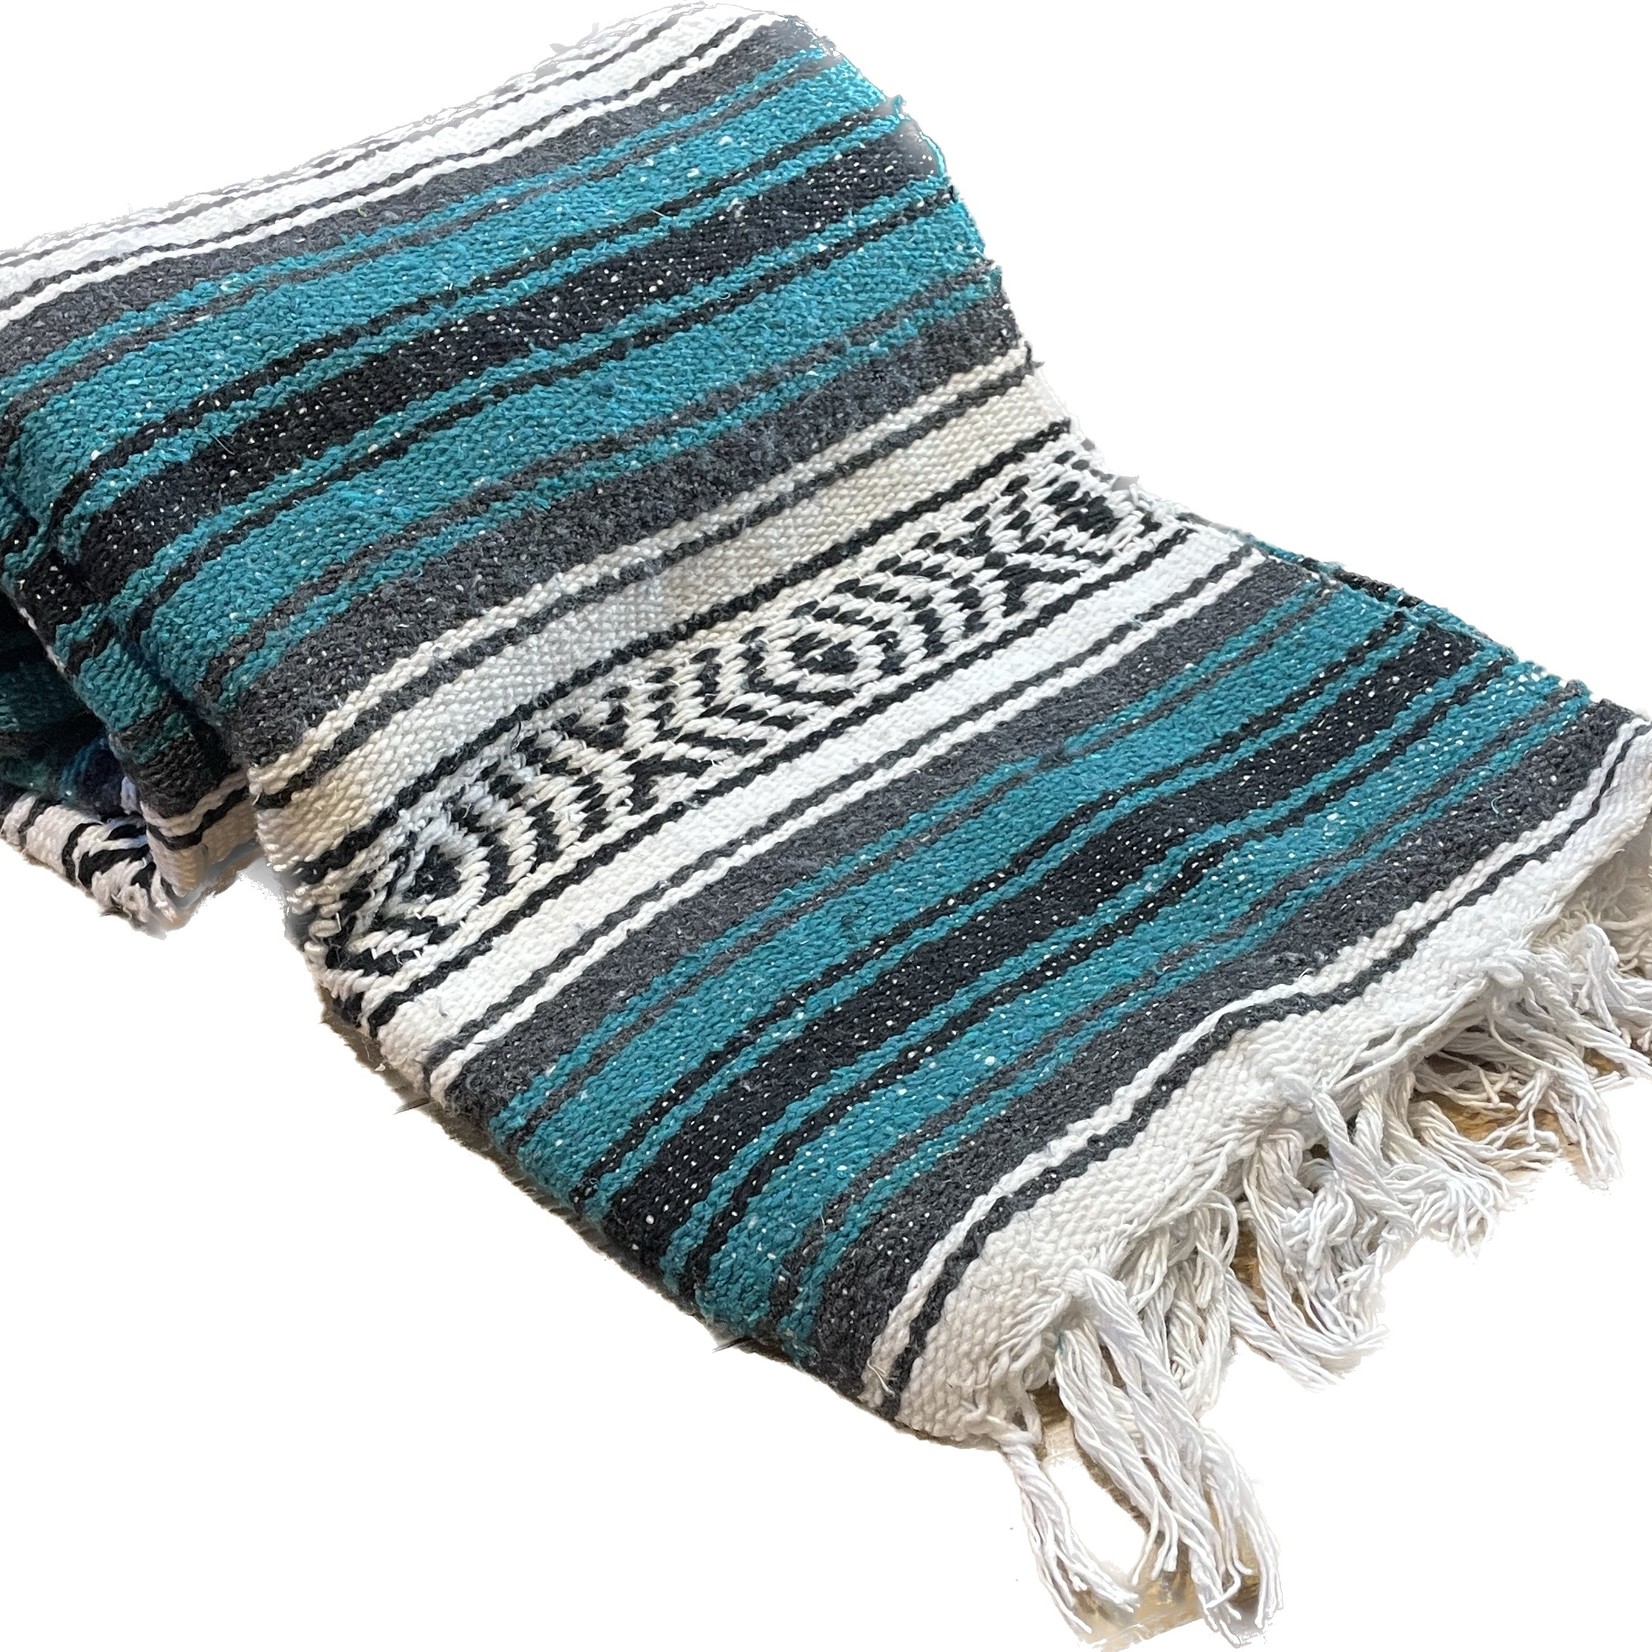 Sercal Mexican Blanket.